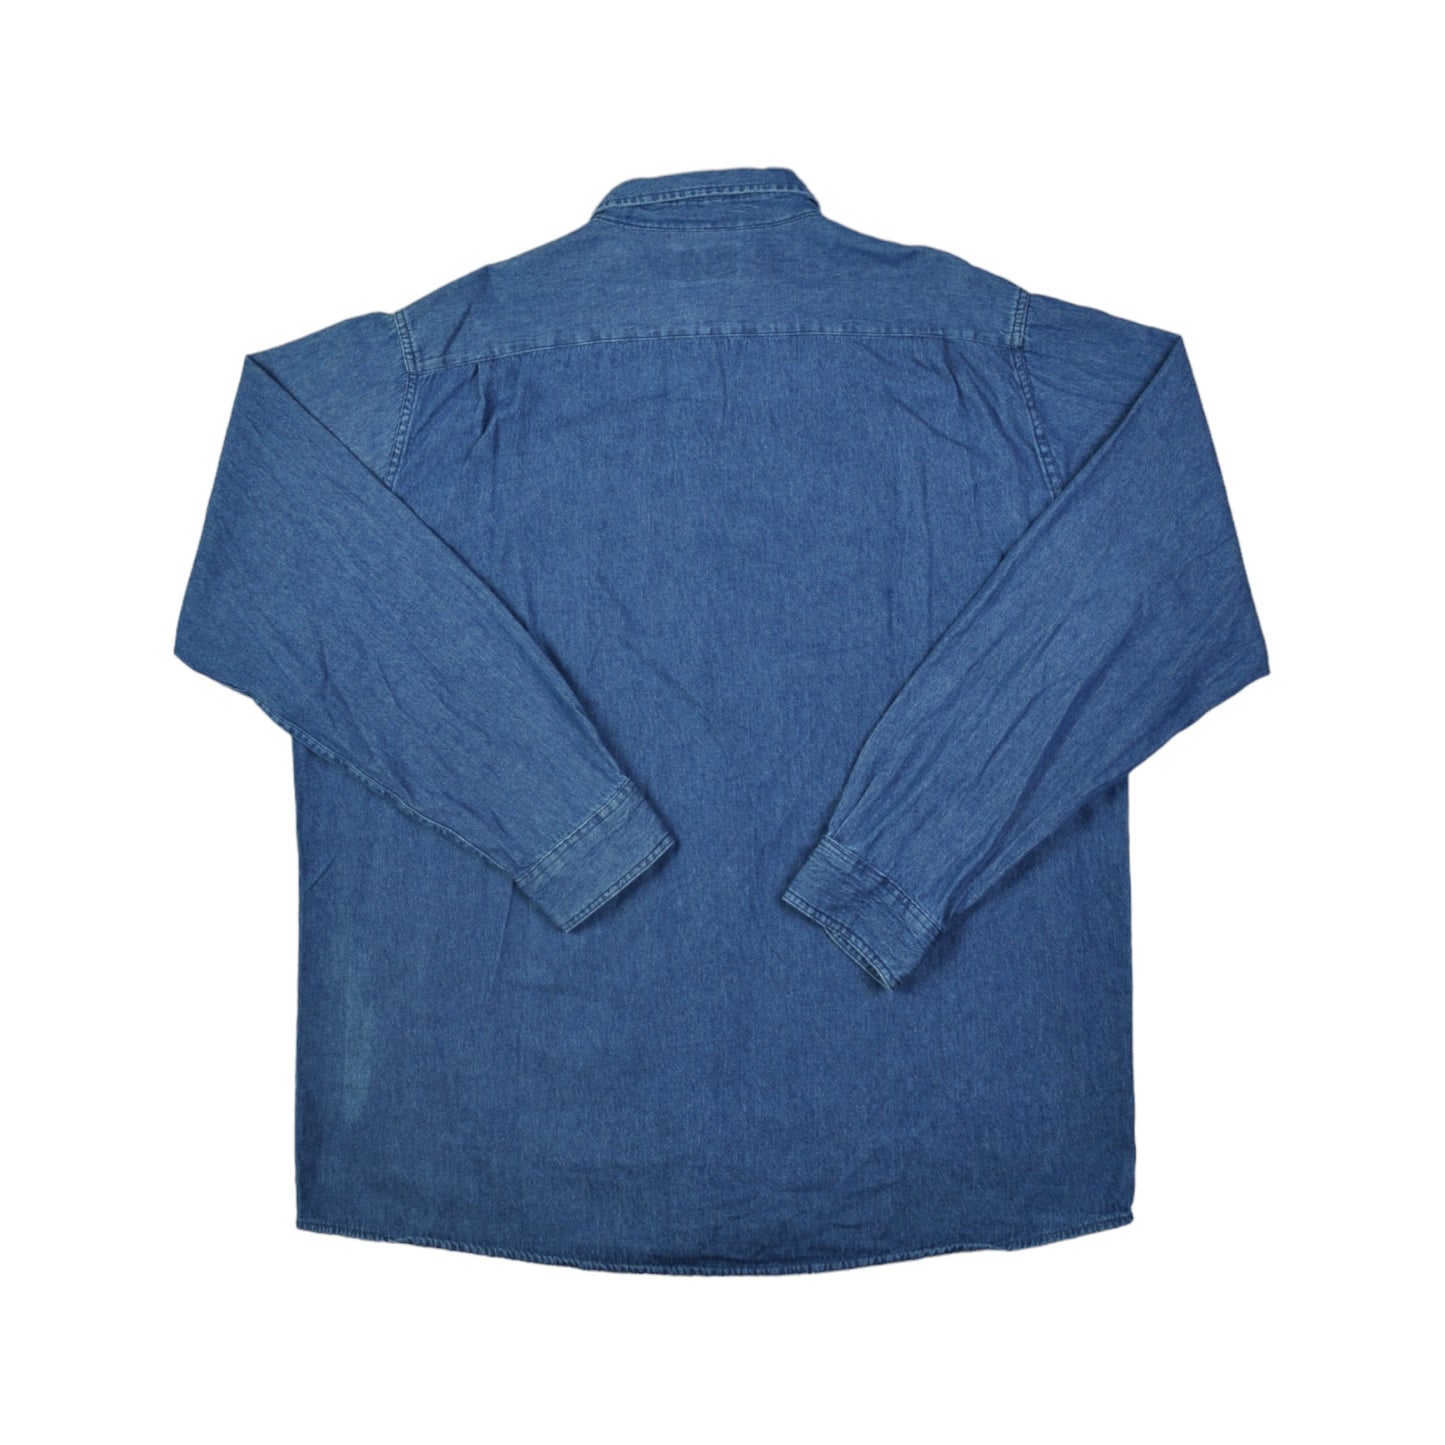 Vintage Wrangler Shirt Long Sleeve Denim Blue XL